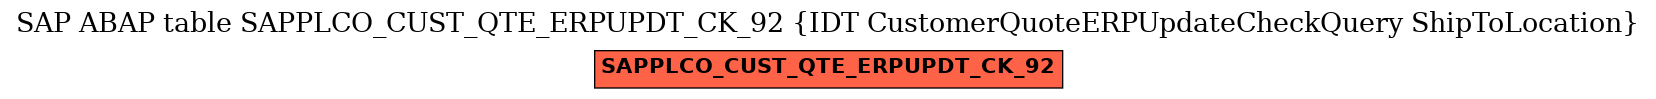 E-R Diagram for table SAPPLCO_CUST_QTE_ERPUPDT_CK_92 (IDT CustomerQuoteERPUpdateCheckQuery ShipToLocation)